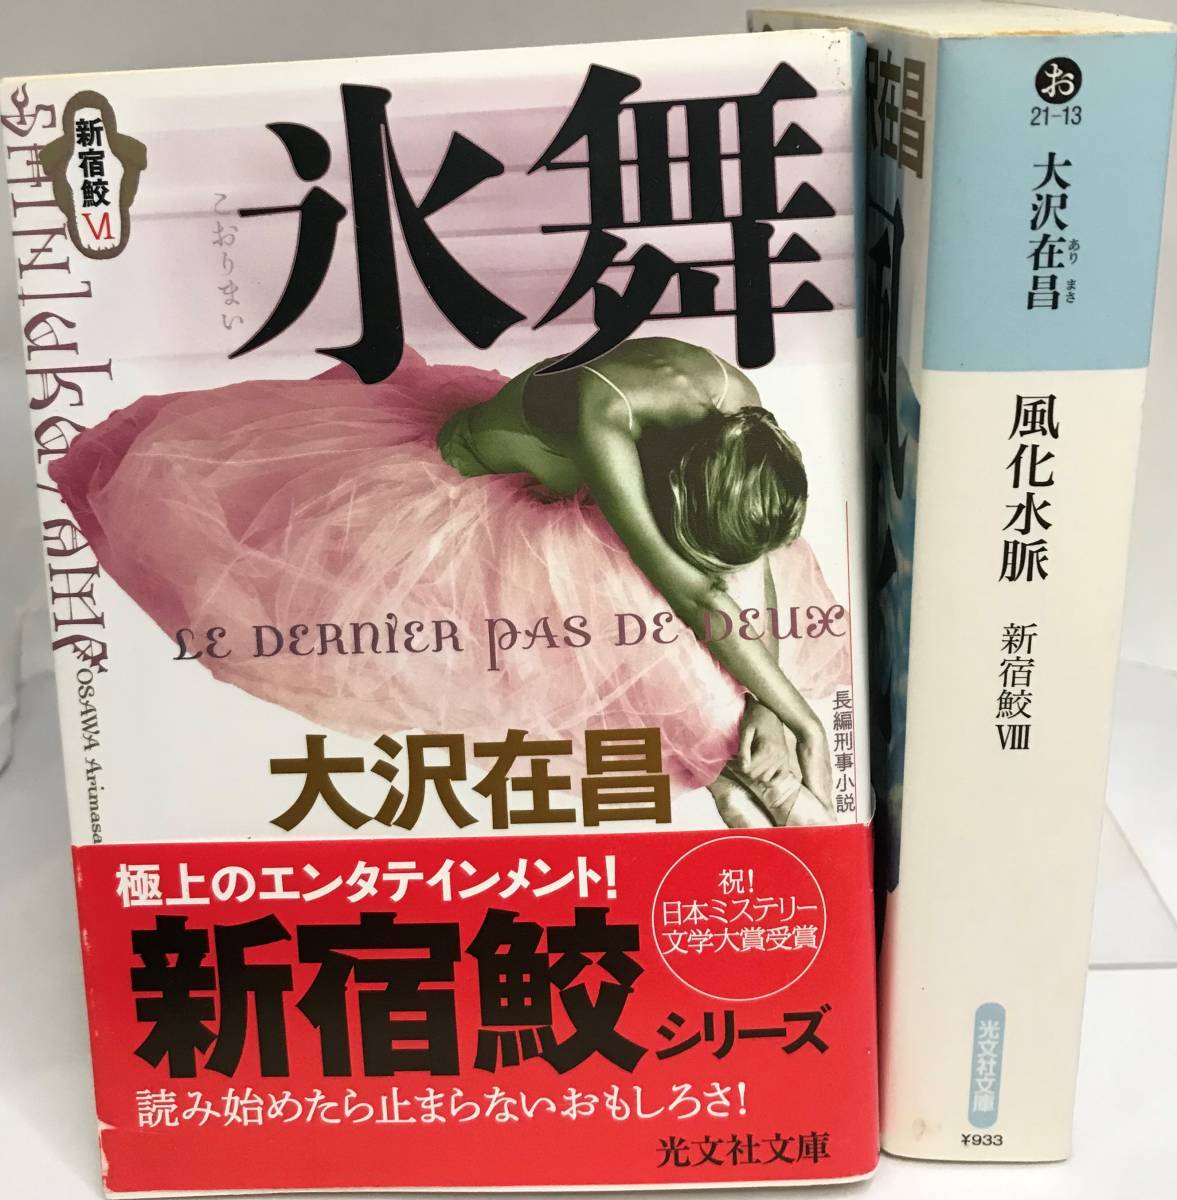  Oosawa Arimasa сборник произведений Shinjuku .Ⅵ.Ⅷ